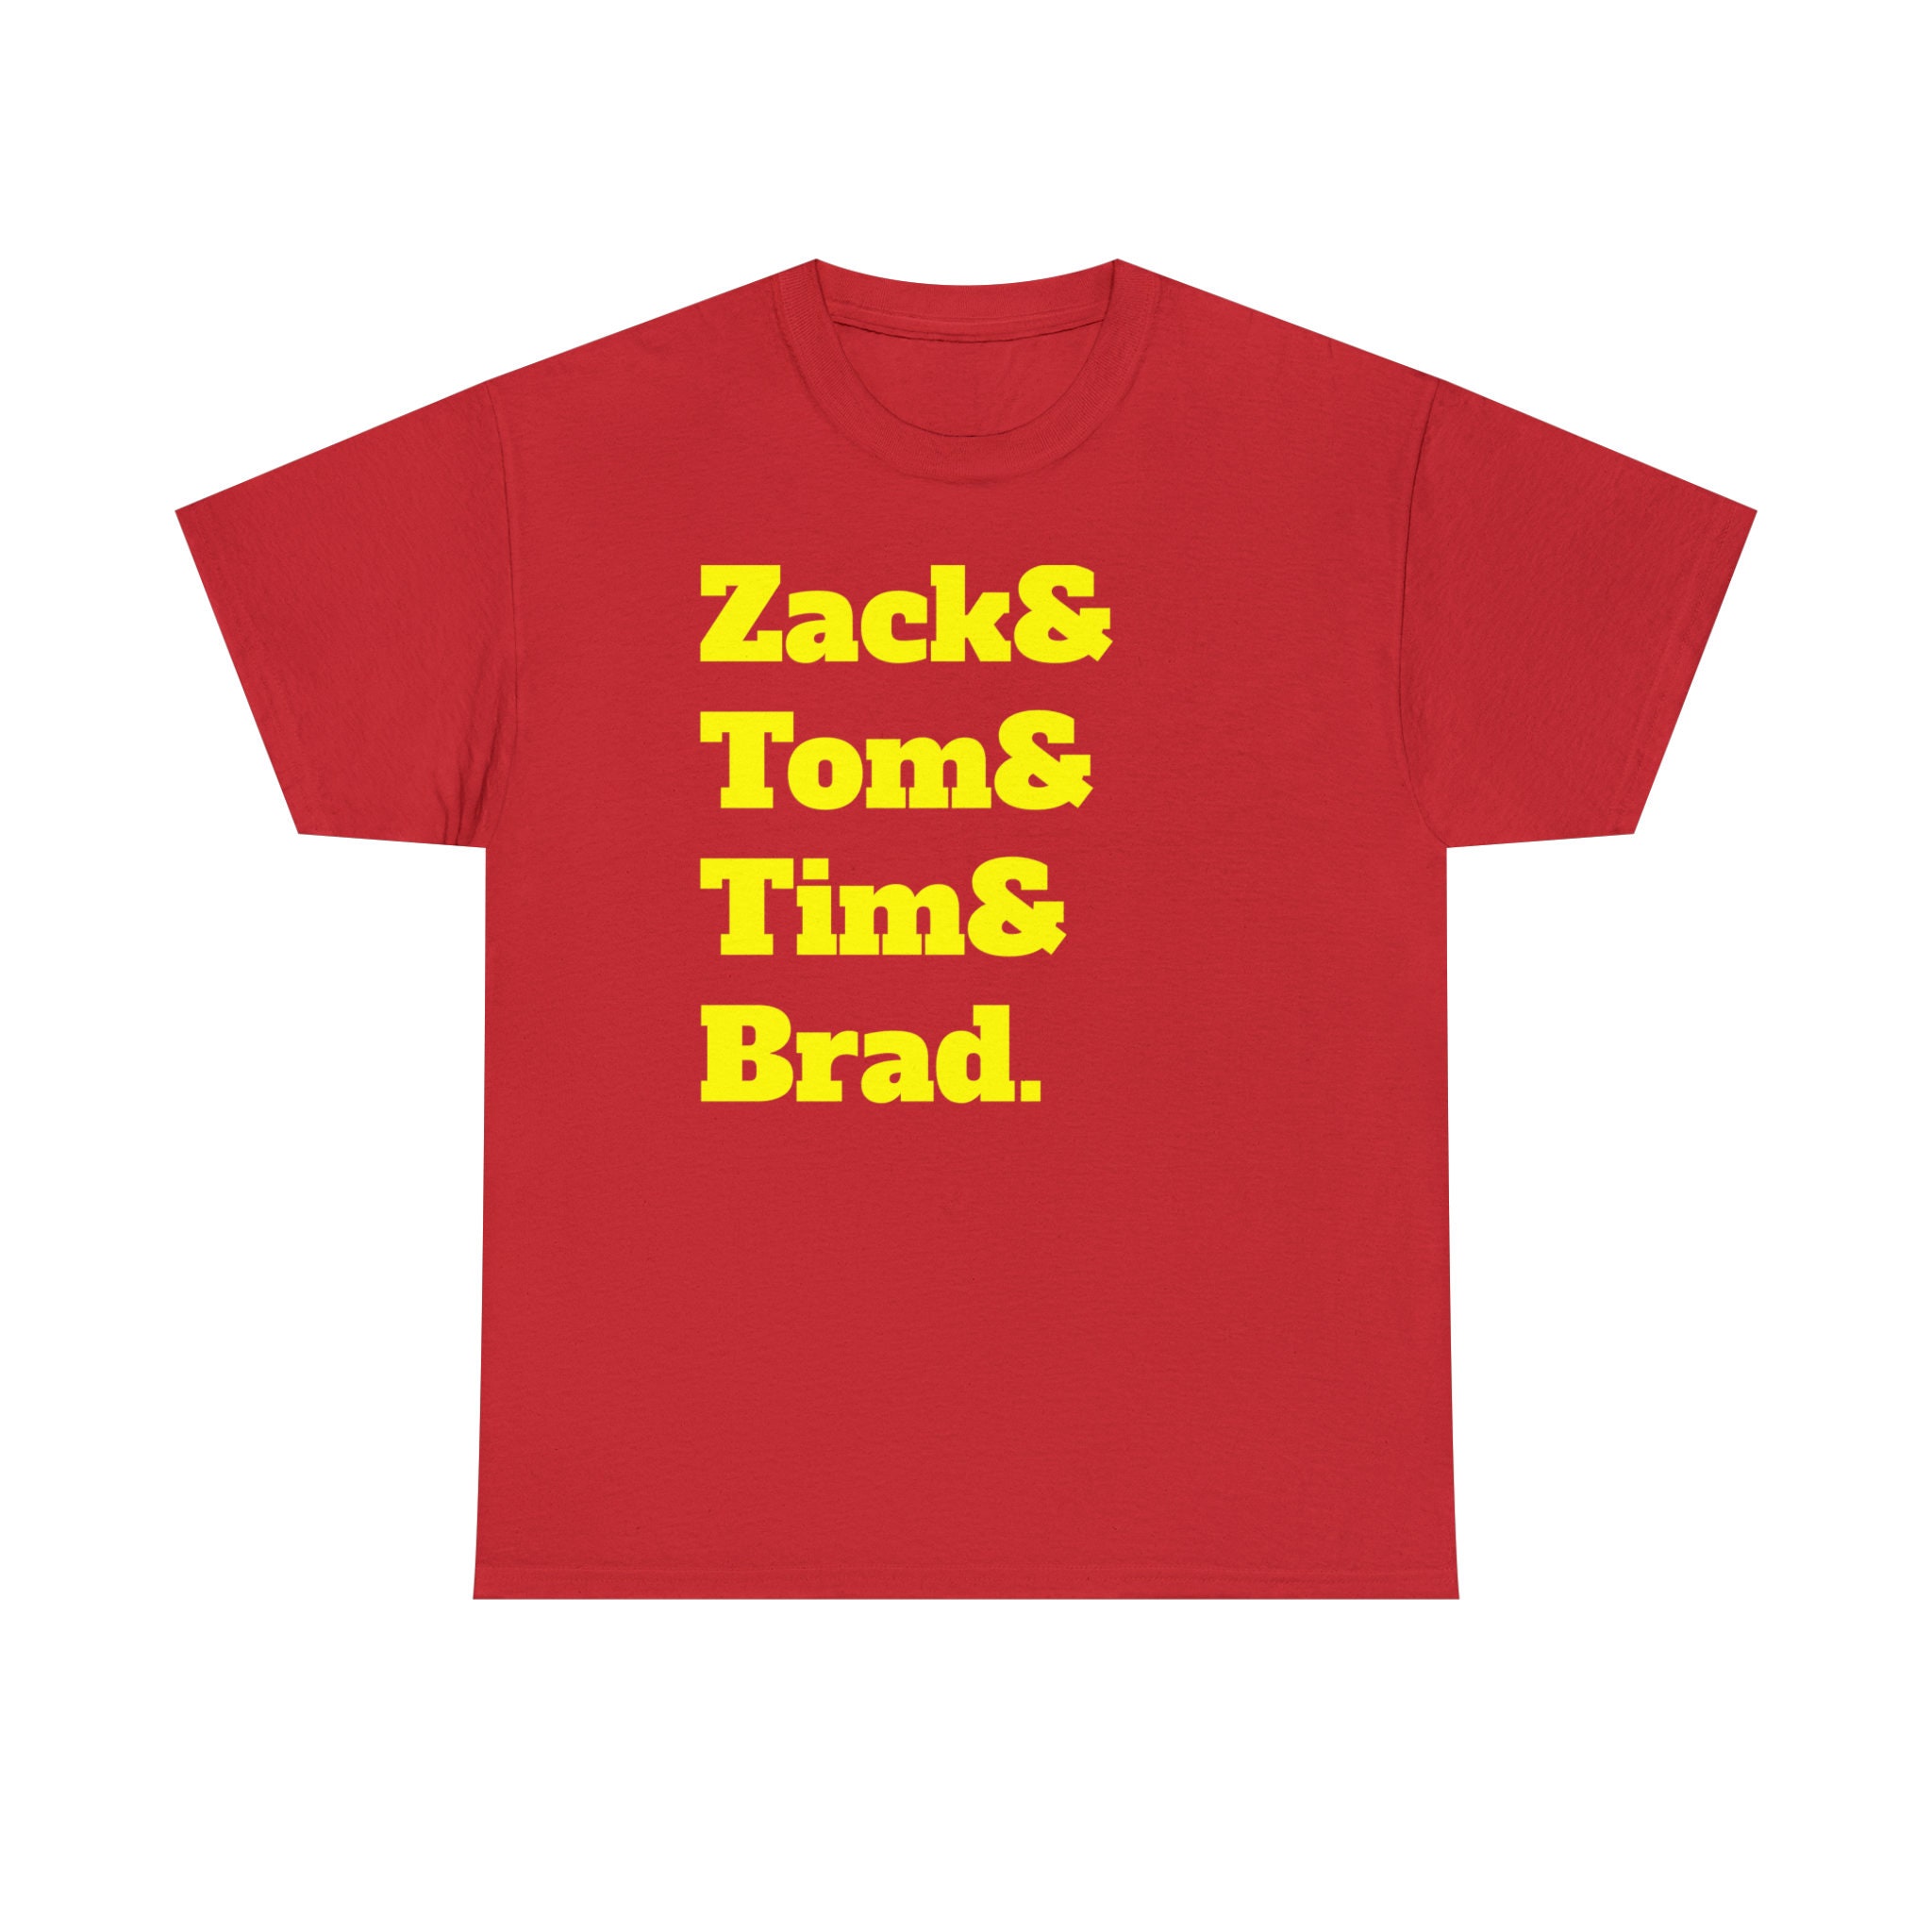 Kid Cudi X Human Made Merch 2022 Nba All-Star Game Members Of The Rage  V-Neck Unisex T-Shirt